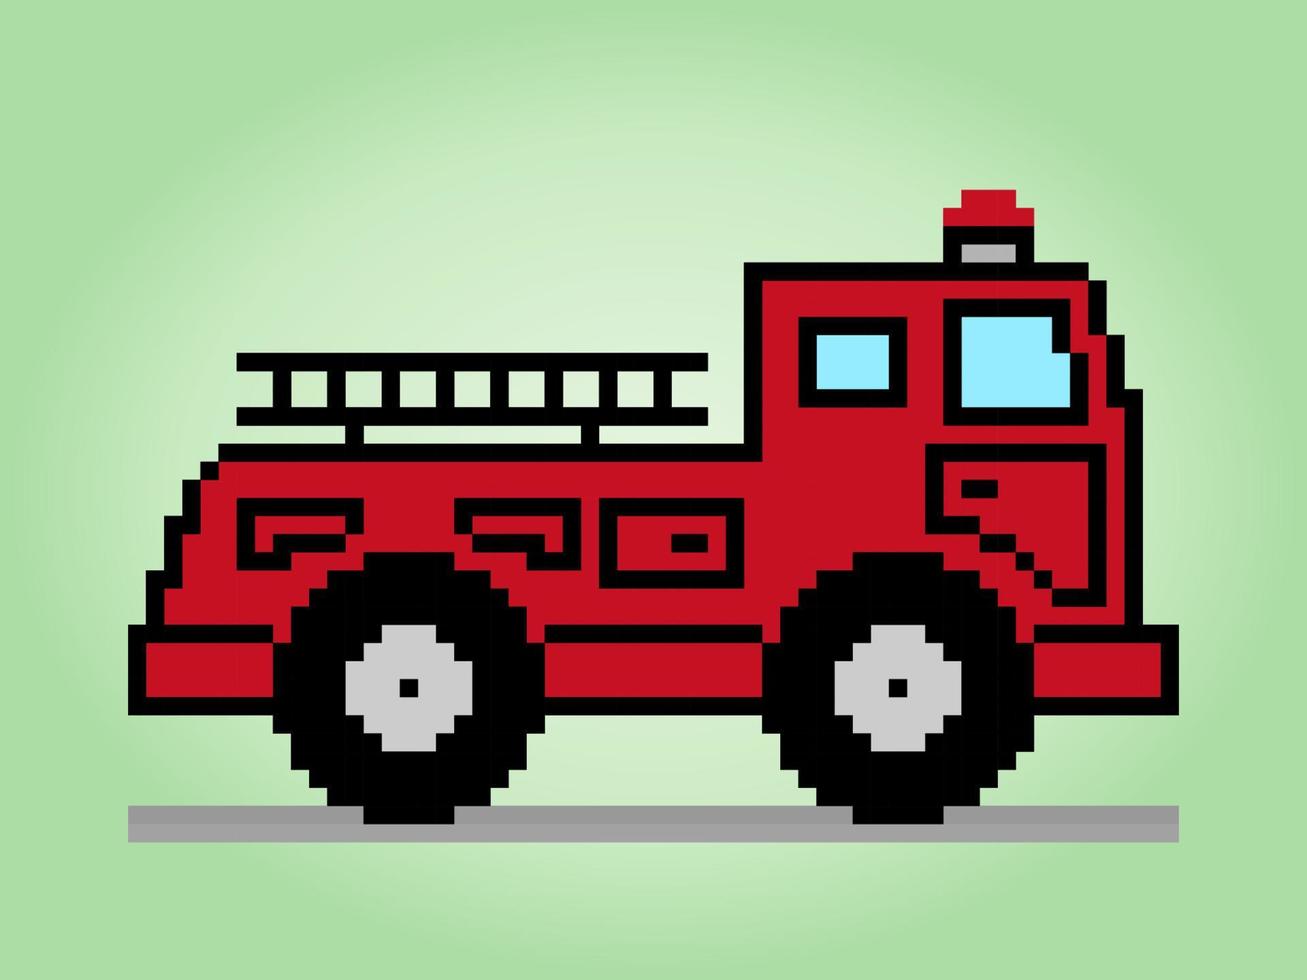 8-bit pixel fire truck image. Car in vector illustration of cross stitch pattern.